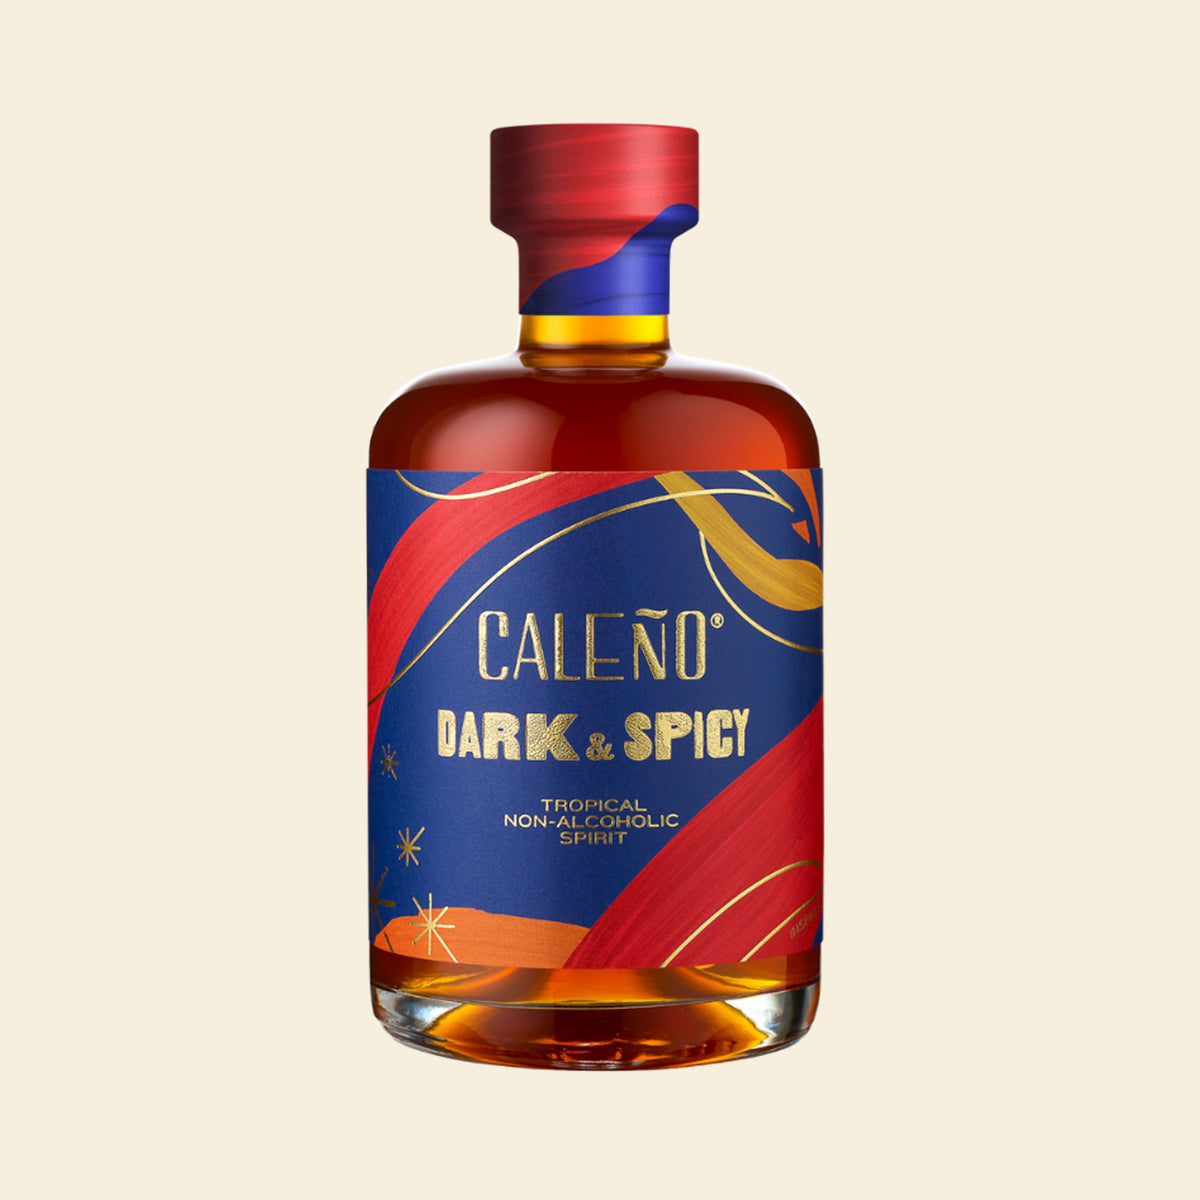 Caleno Dark and Spicy Nonalcoholic Spirit